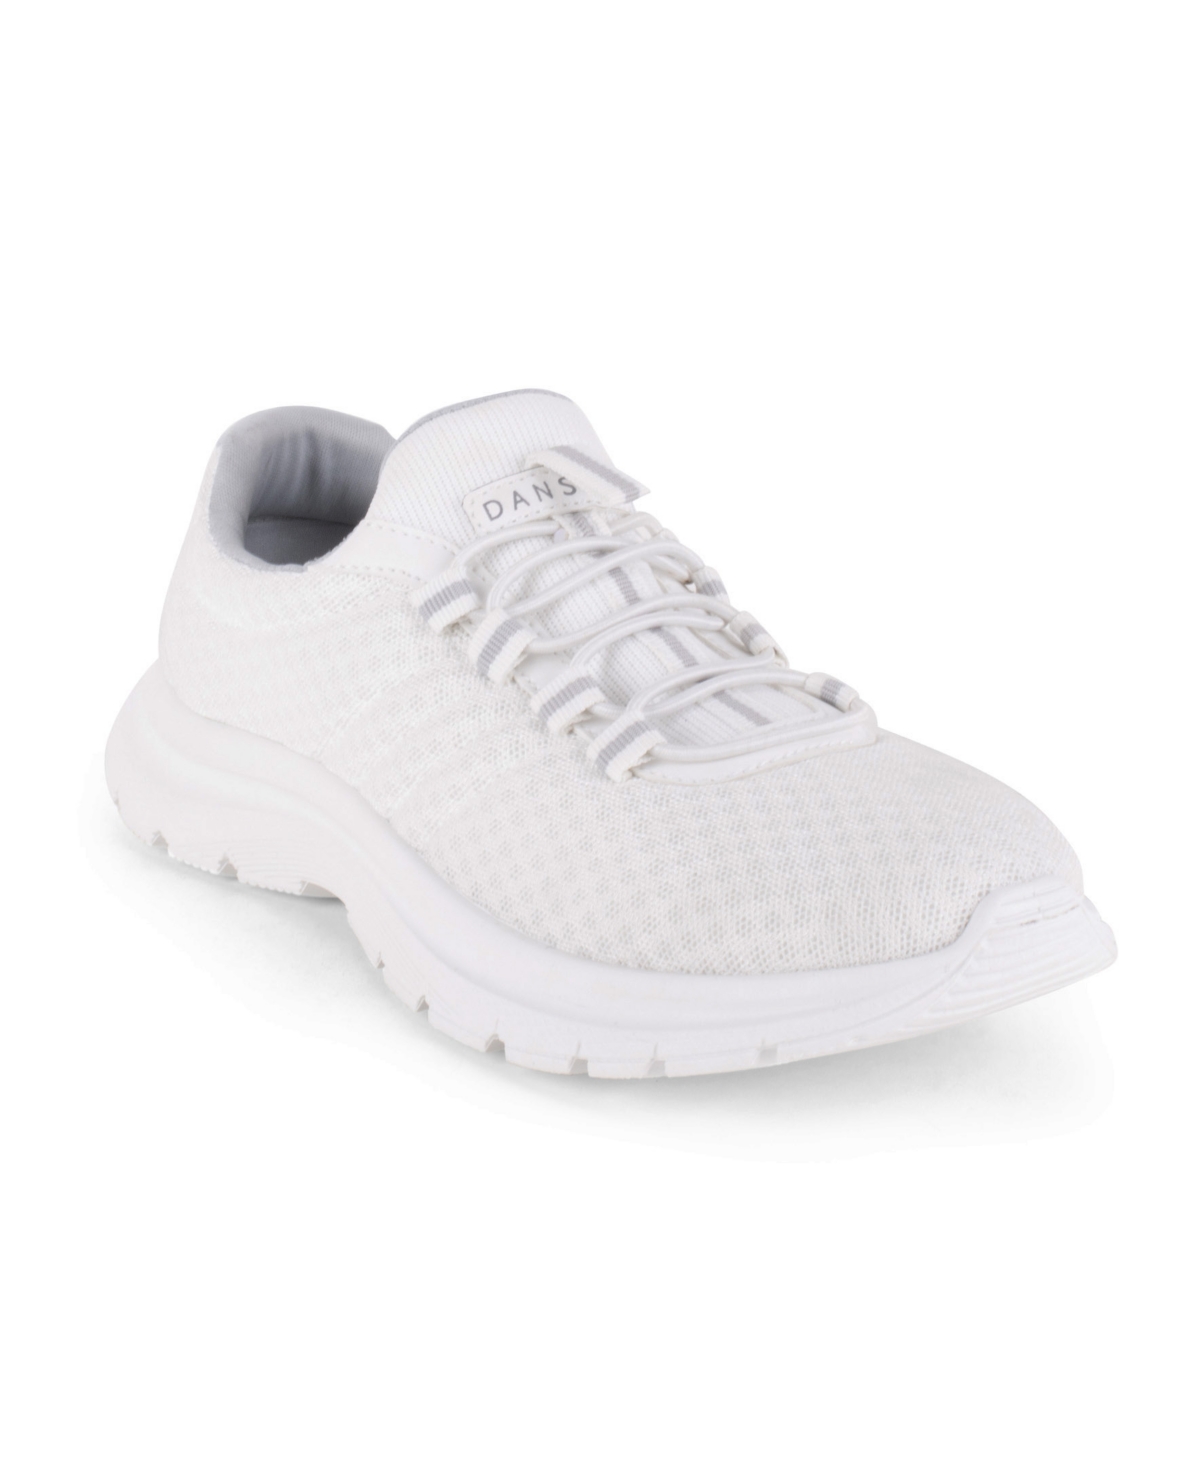 Women's Stamina Slip On Sneaker - White/grey